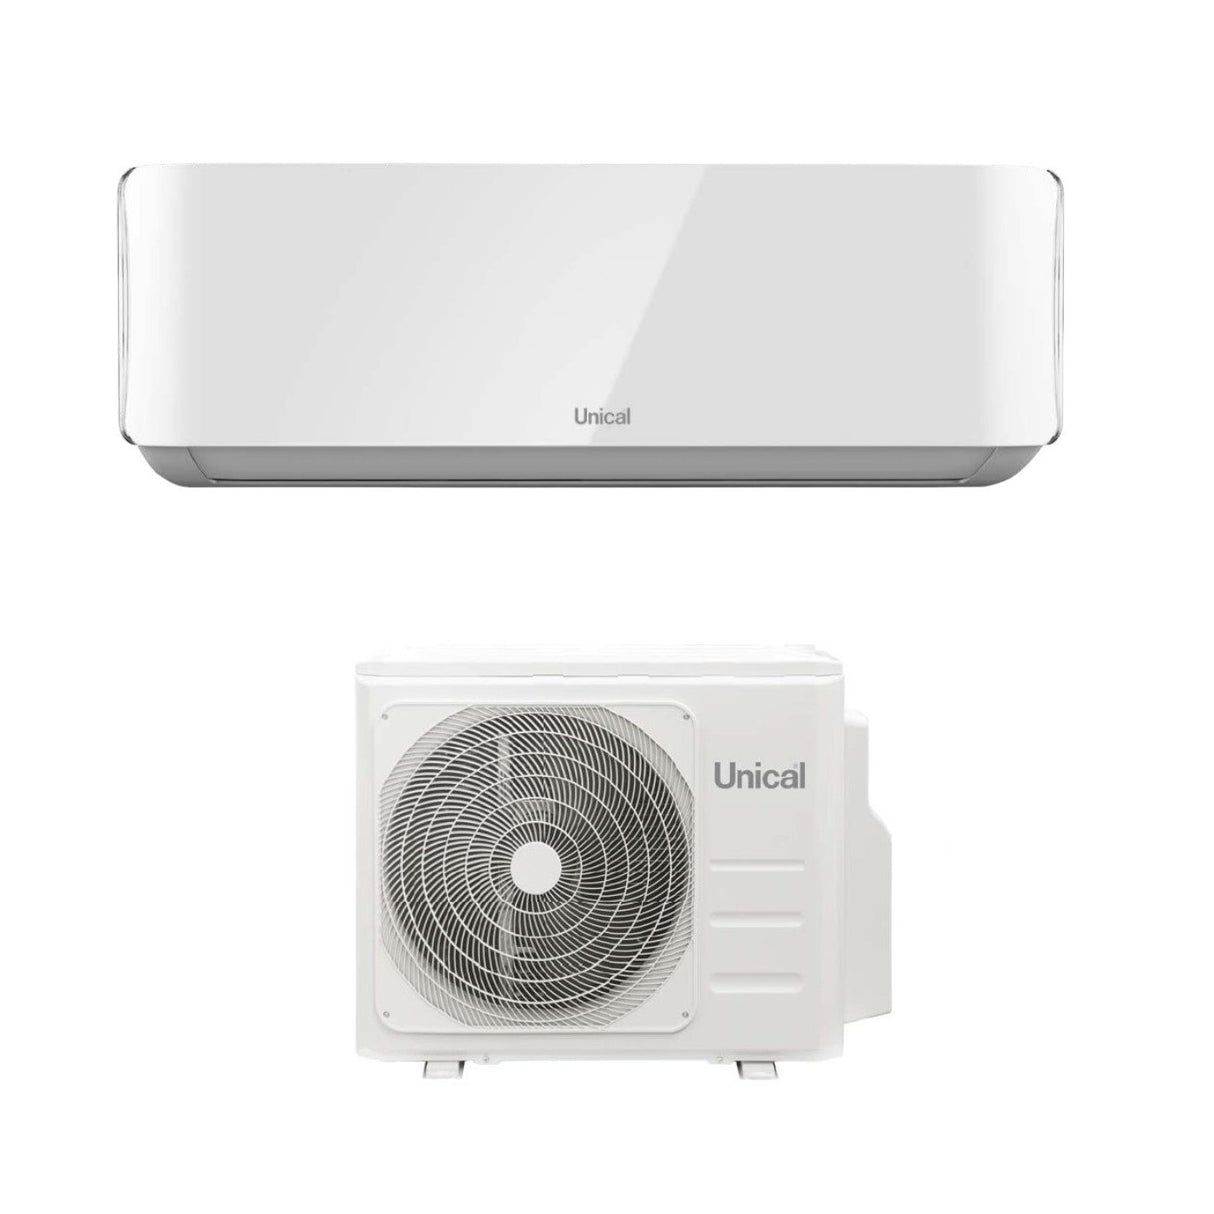 immagine-1-unical-climatizzatore-condizionatore-unical-inverter-mono-split-serie-air-cristal-24000-btu-kmun-24h-r-32-wi-fi-optional-ean-8059657009999